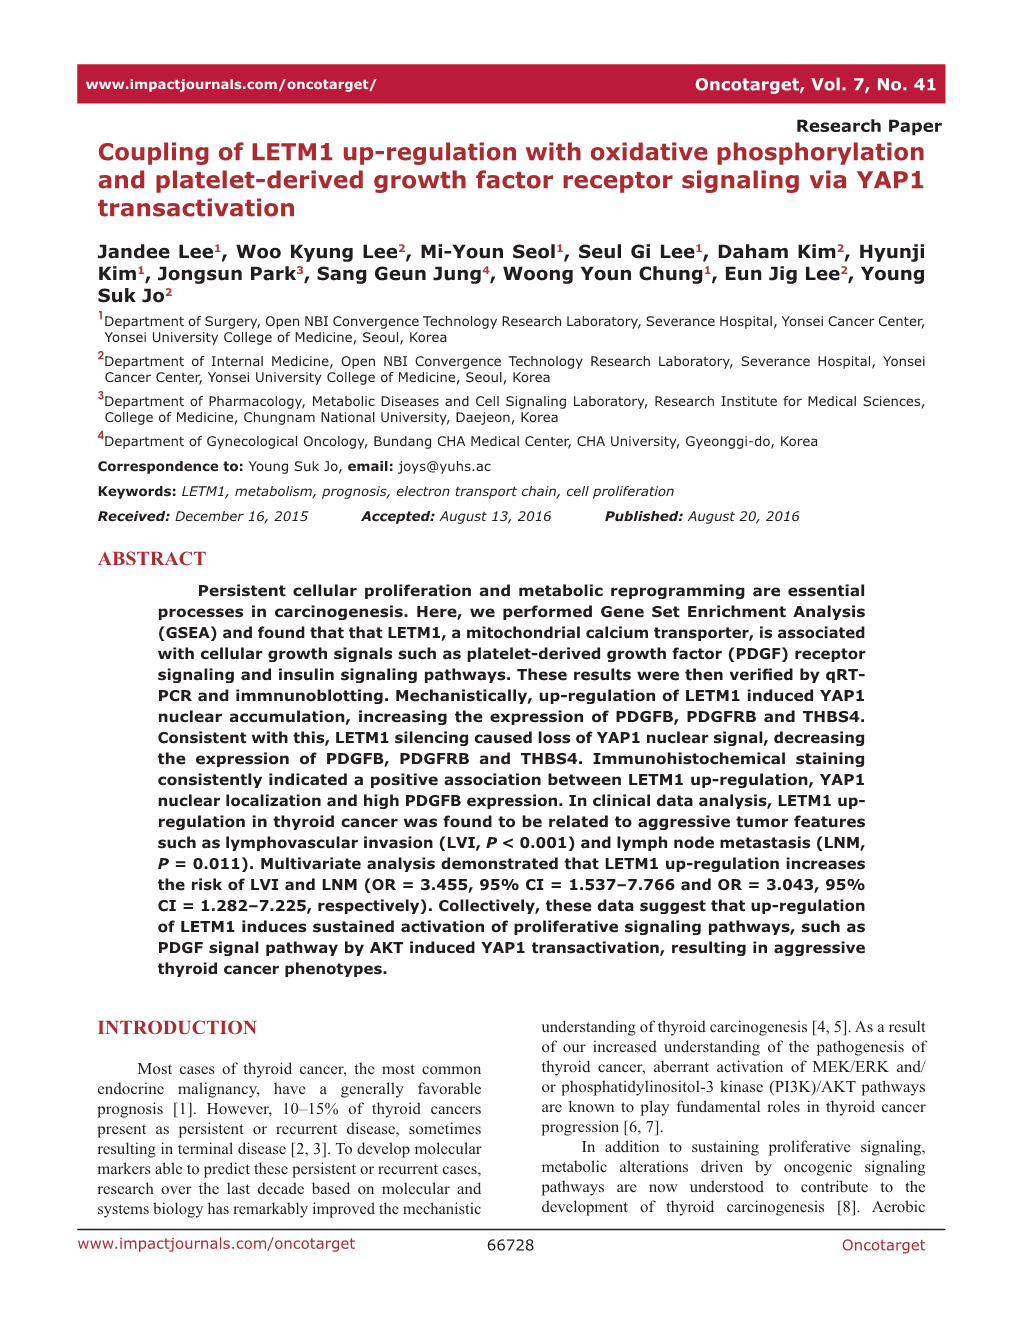 Coupling of LETM1 Up-Regulation with Oxidative Phosphorylation and Platelet-Derived Growth Factor Receptor Signaling Via YAP1 Transactivation